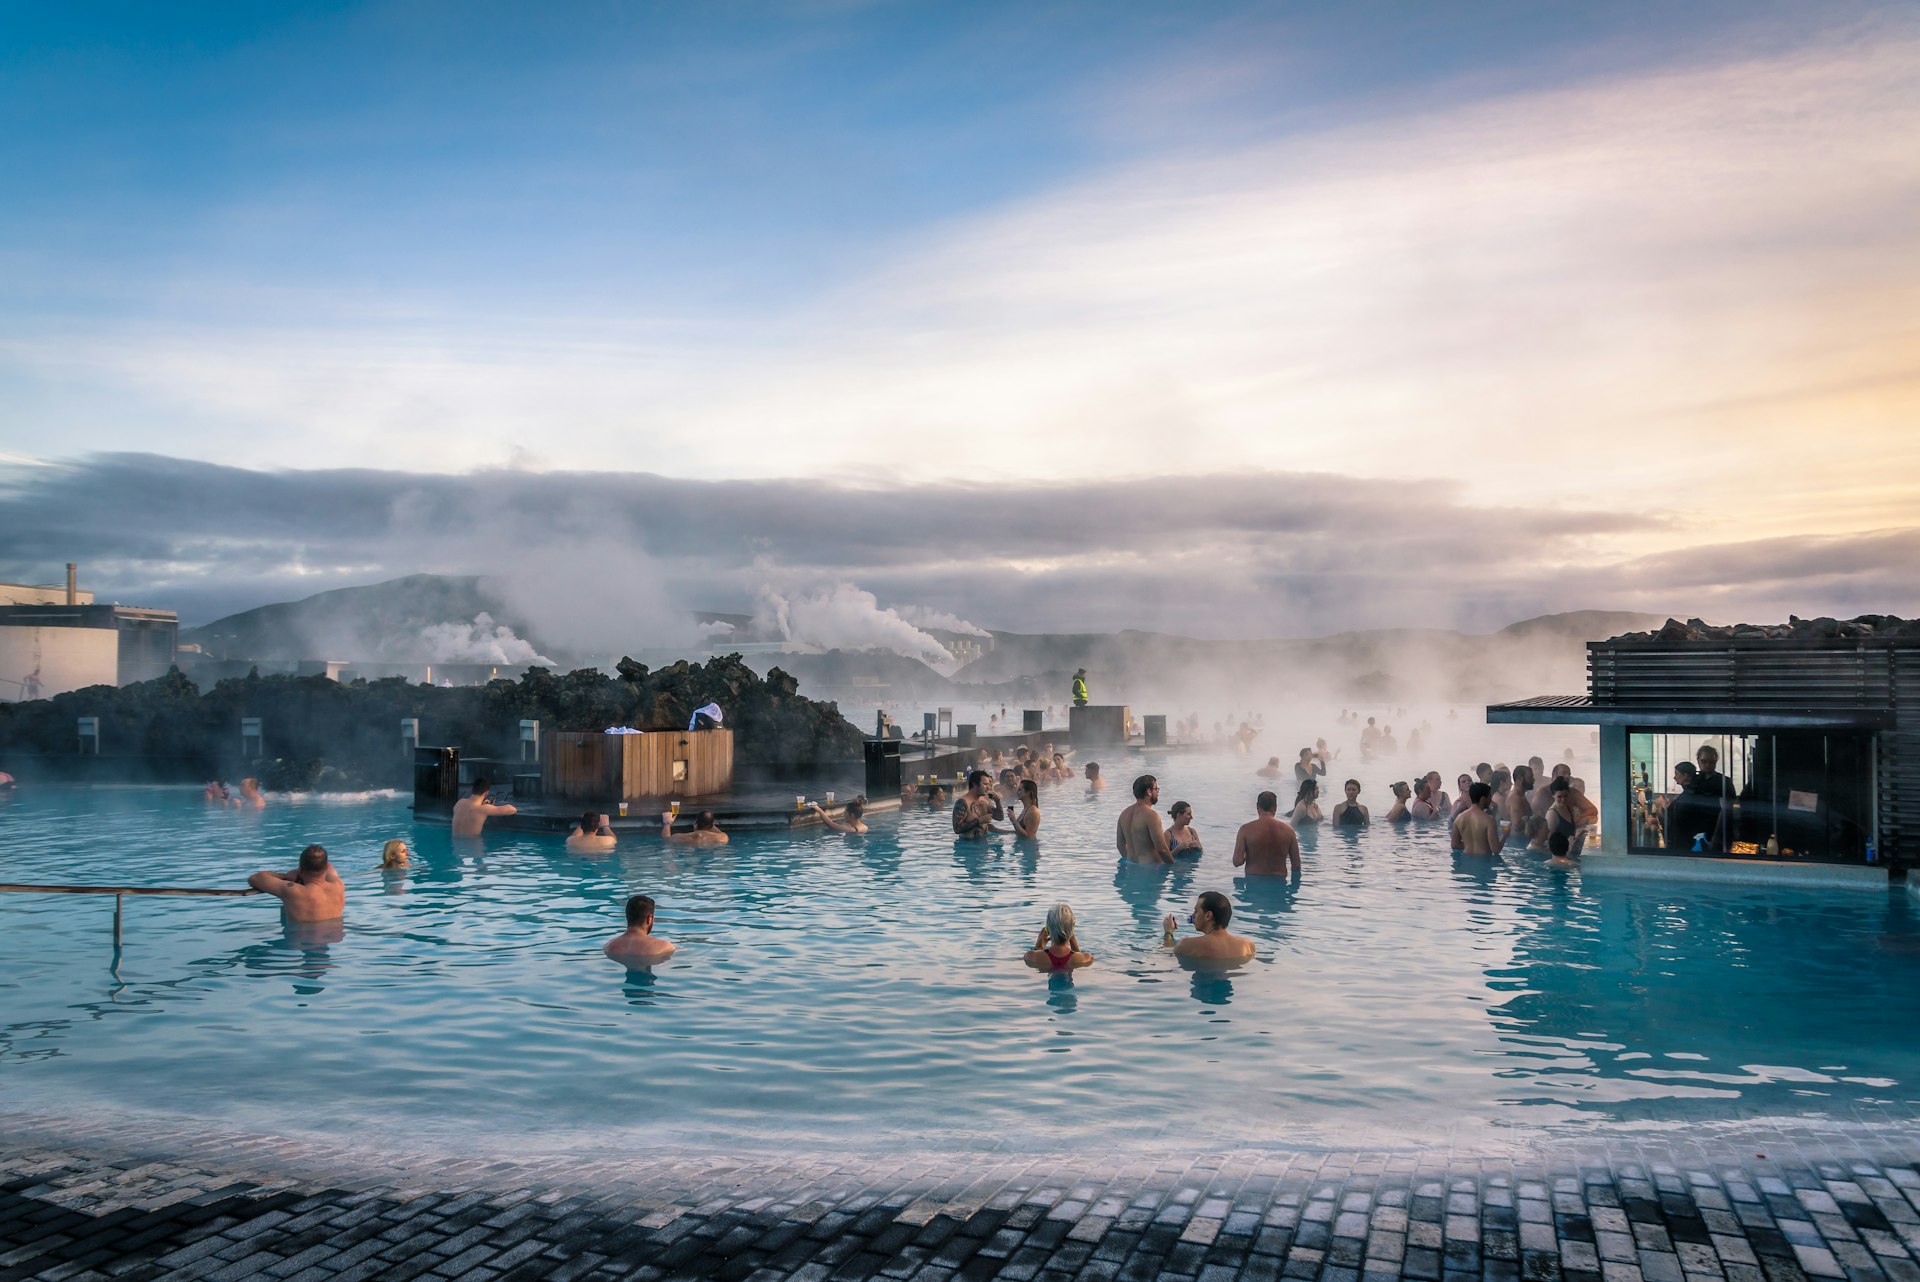 People bathing in the hot waters of Blue Lagoon, a geothermal bath resort.